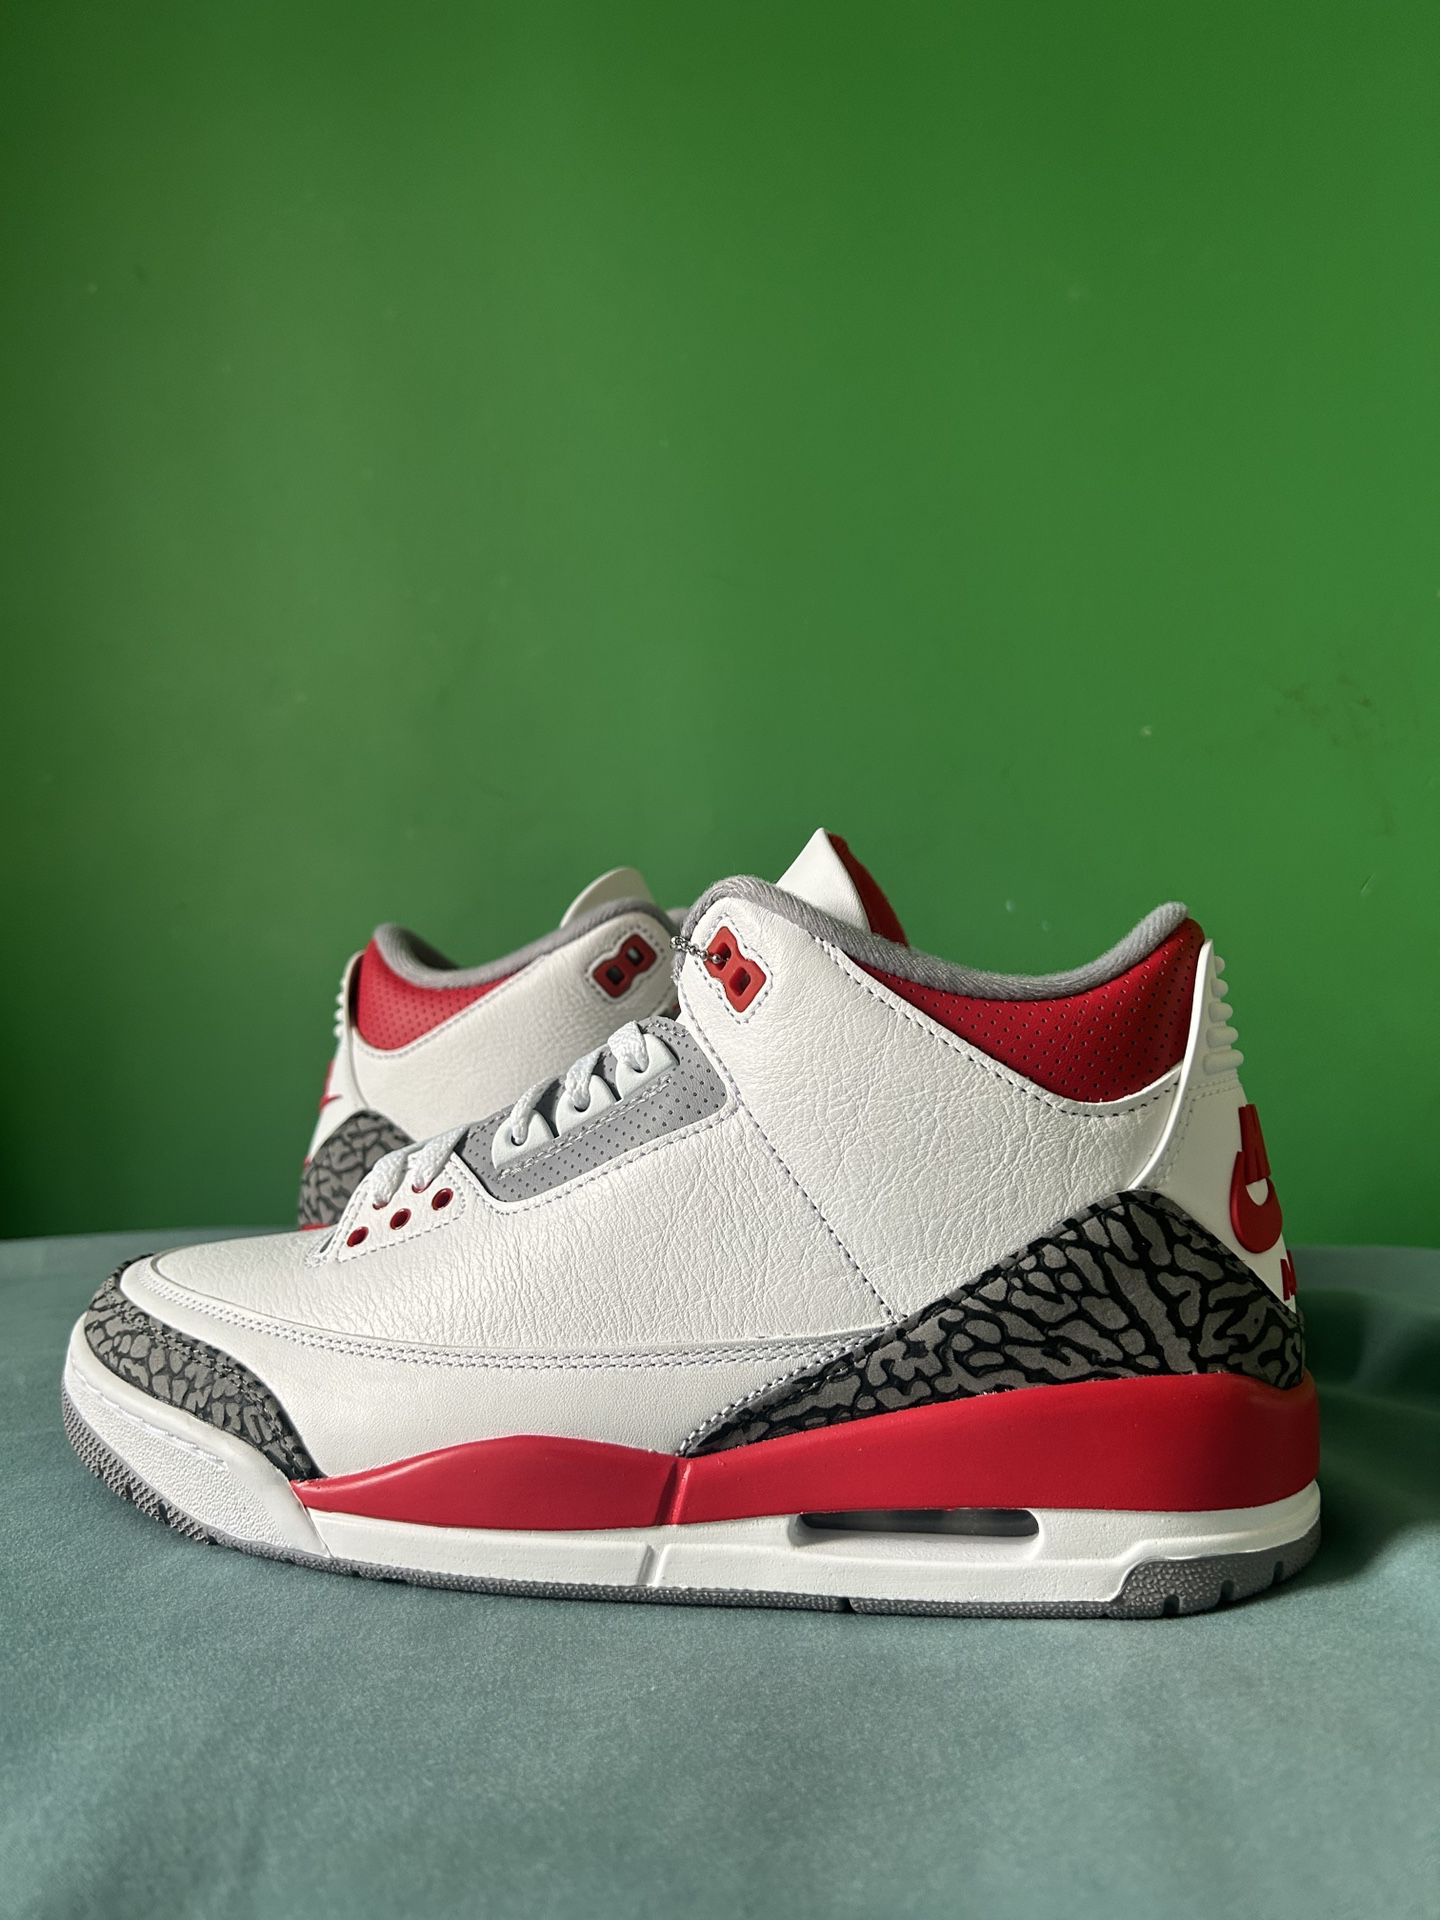 Nike Air Jordan 3 Fire Red Size 10